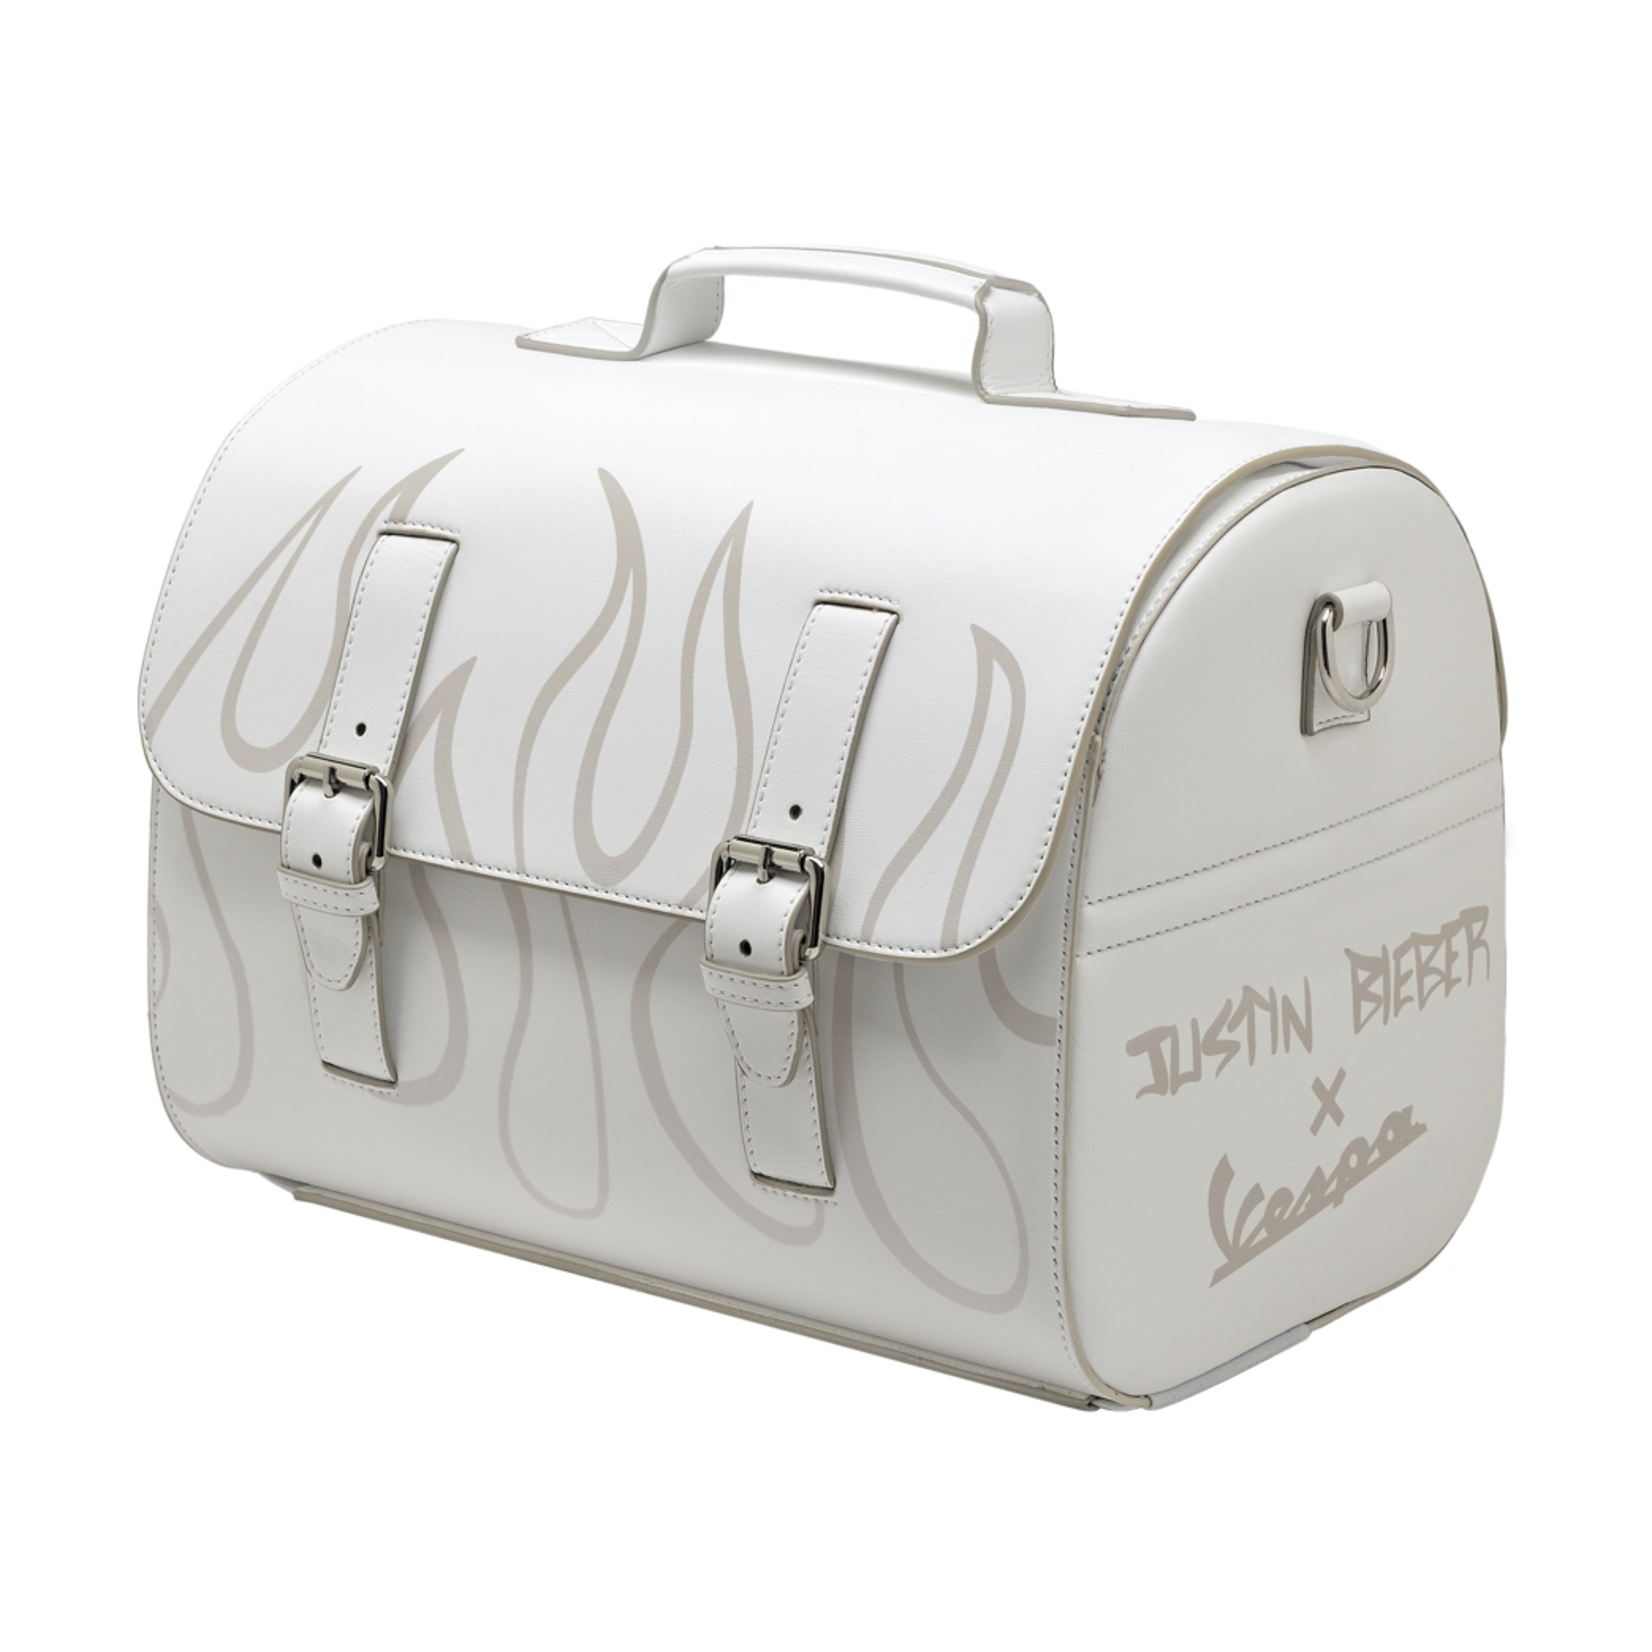 Accessories Top Case, Vespa Leather Bag JB Edition White